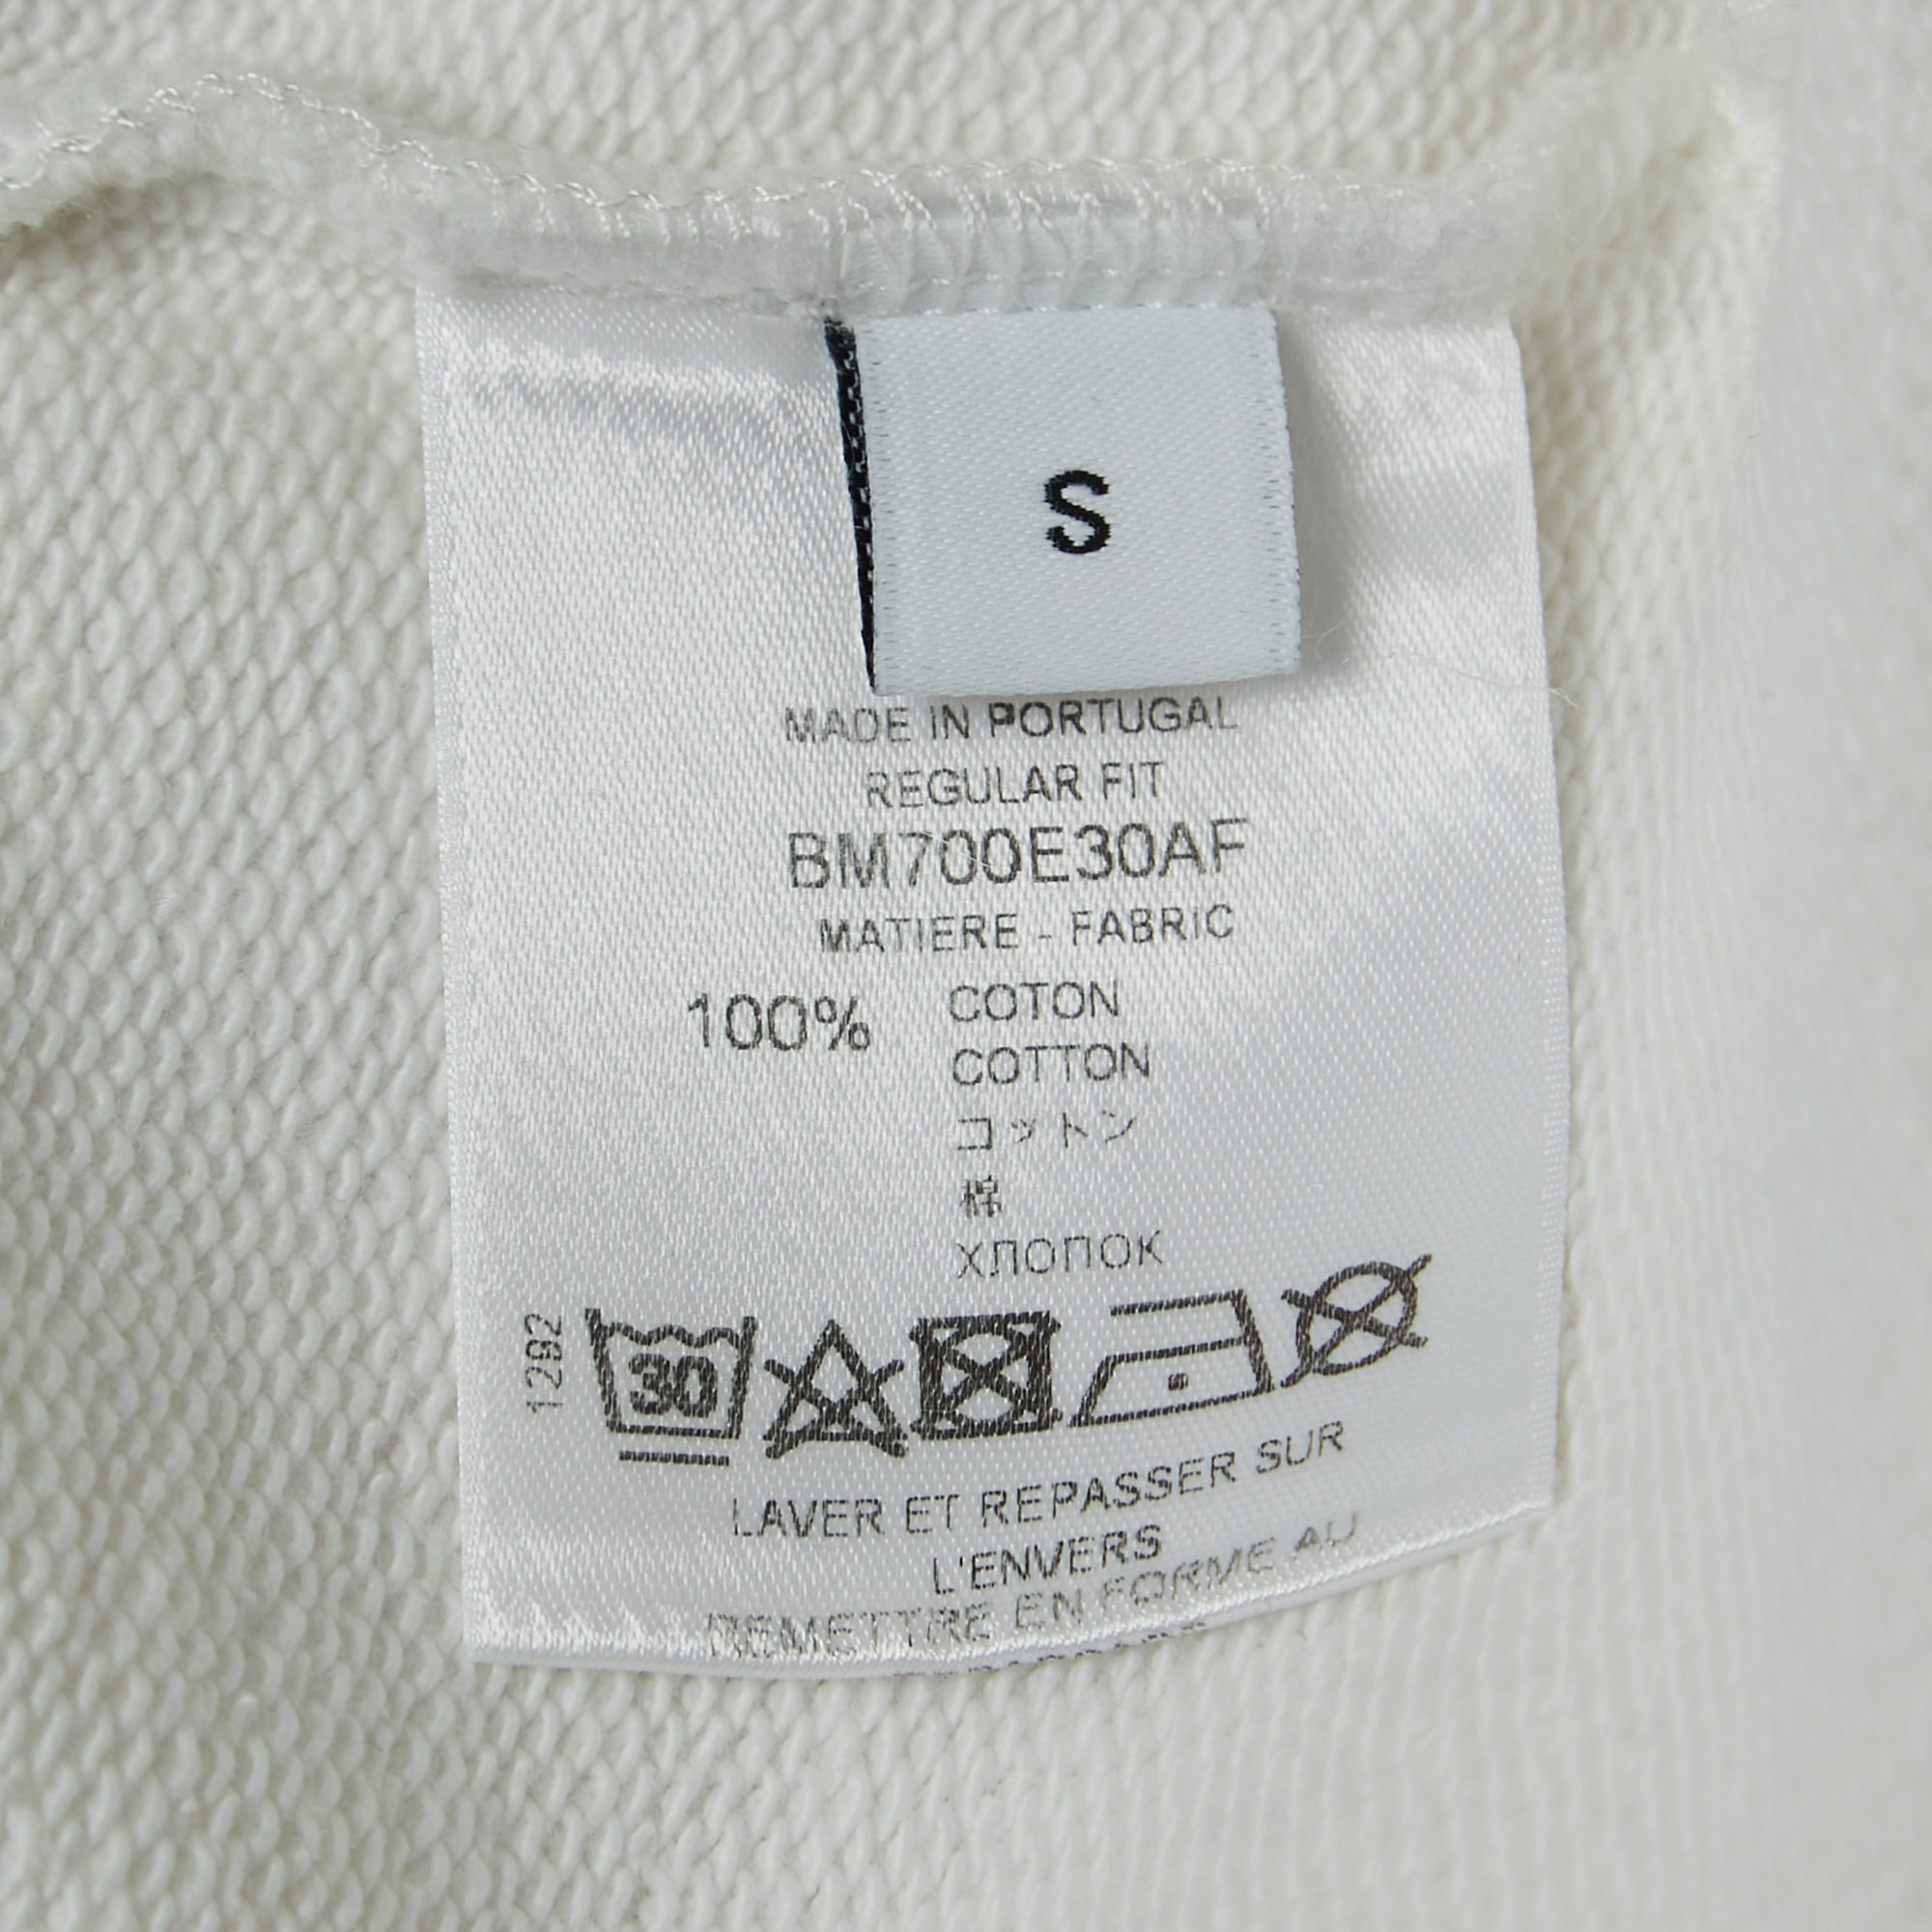 Givenchy White Dragon Head Logo Print Cotton Sweatshirt S